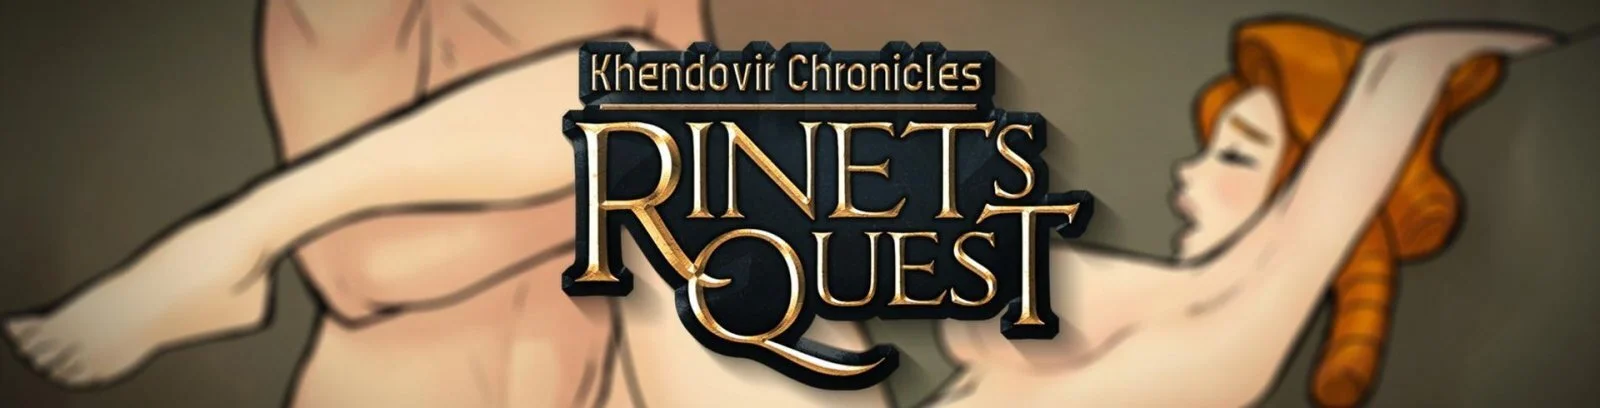 Khendovir Chronicles: Rinets Quest [v0.1402] main image